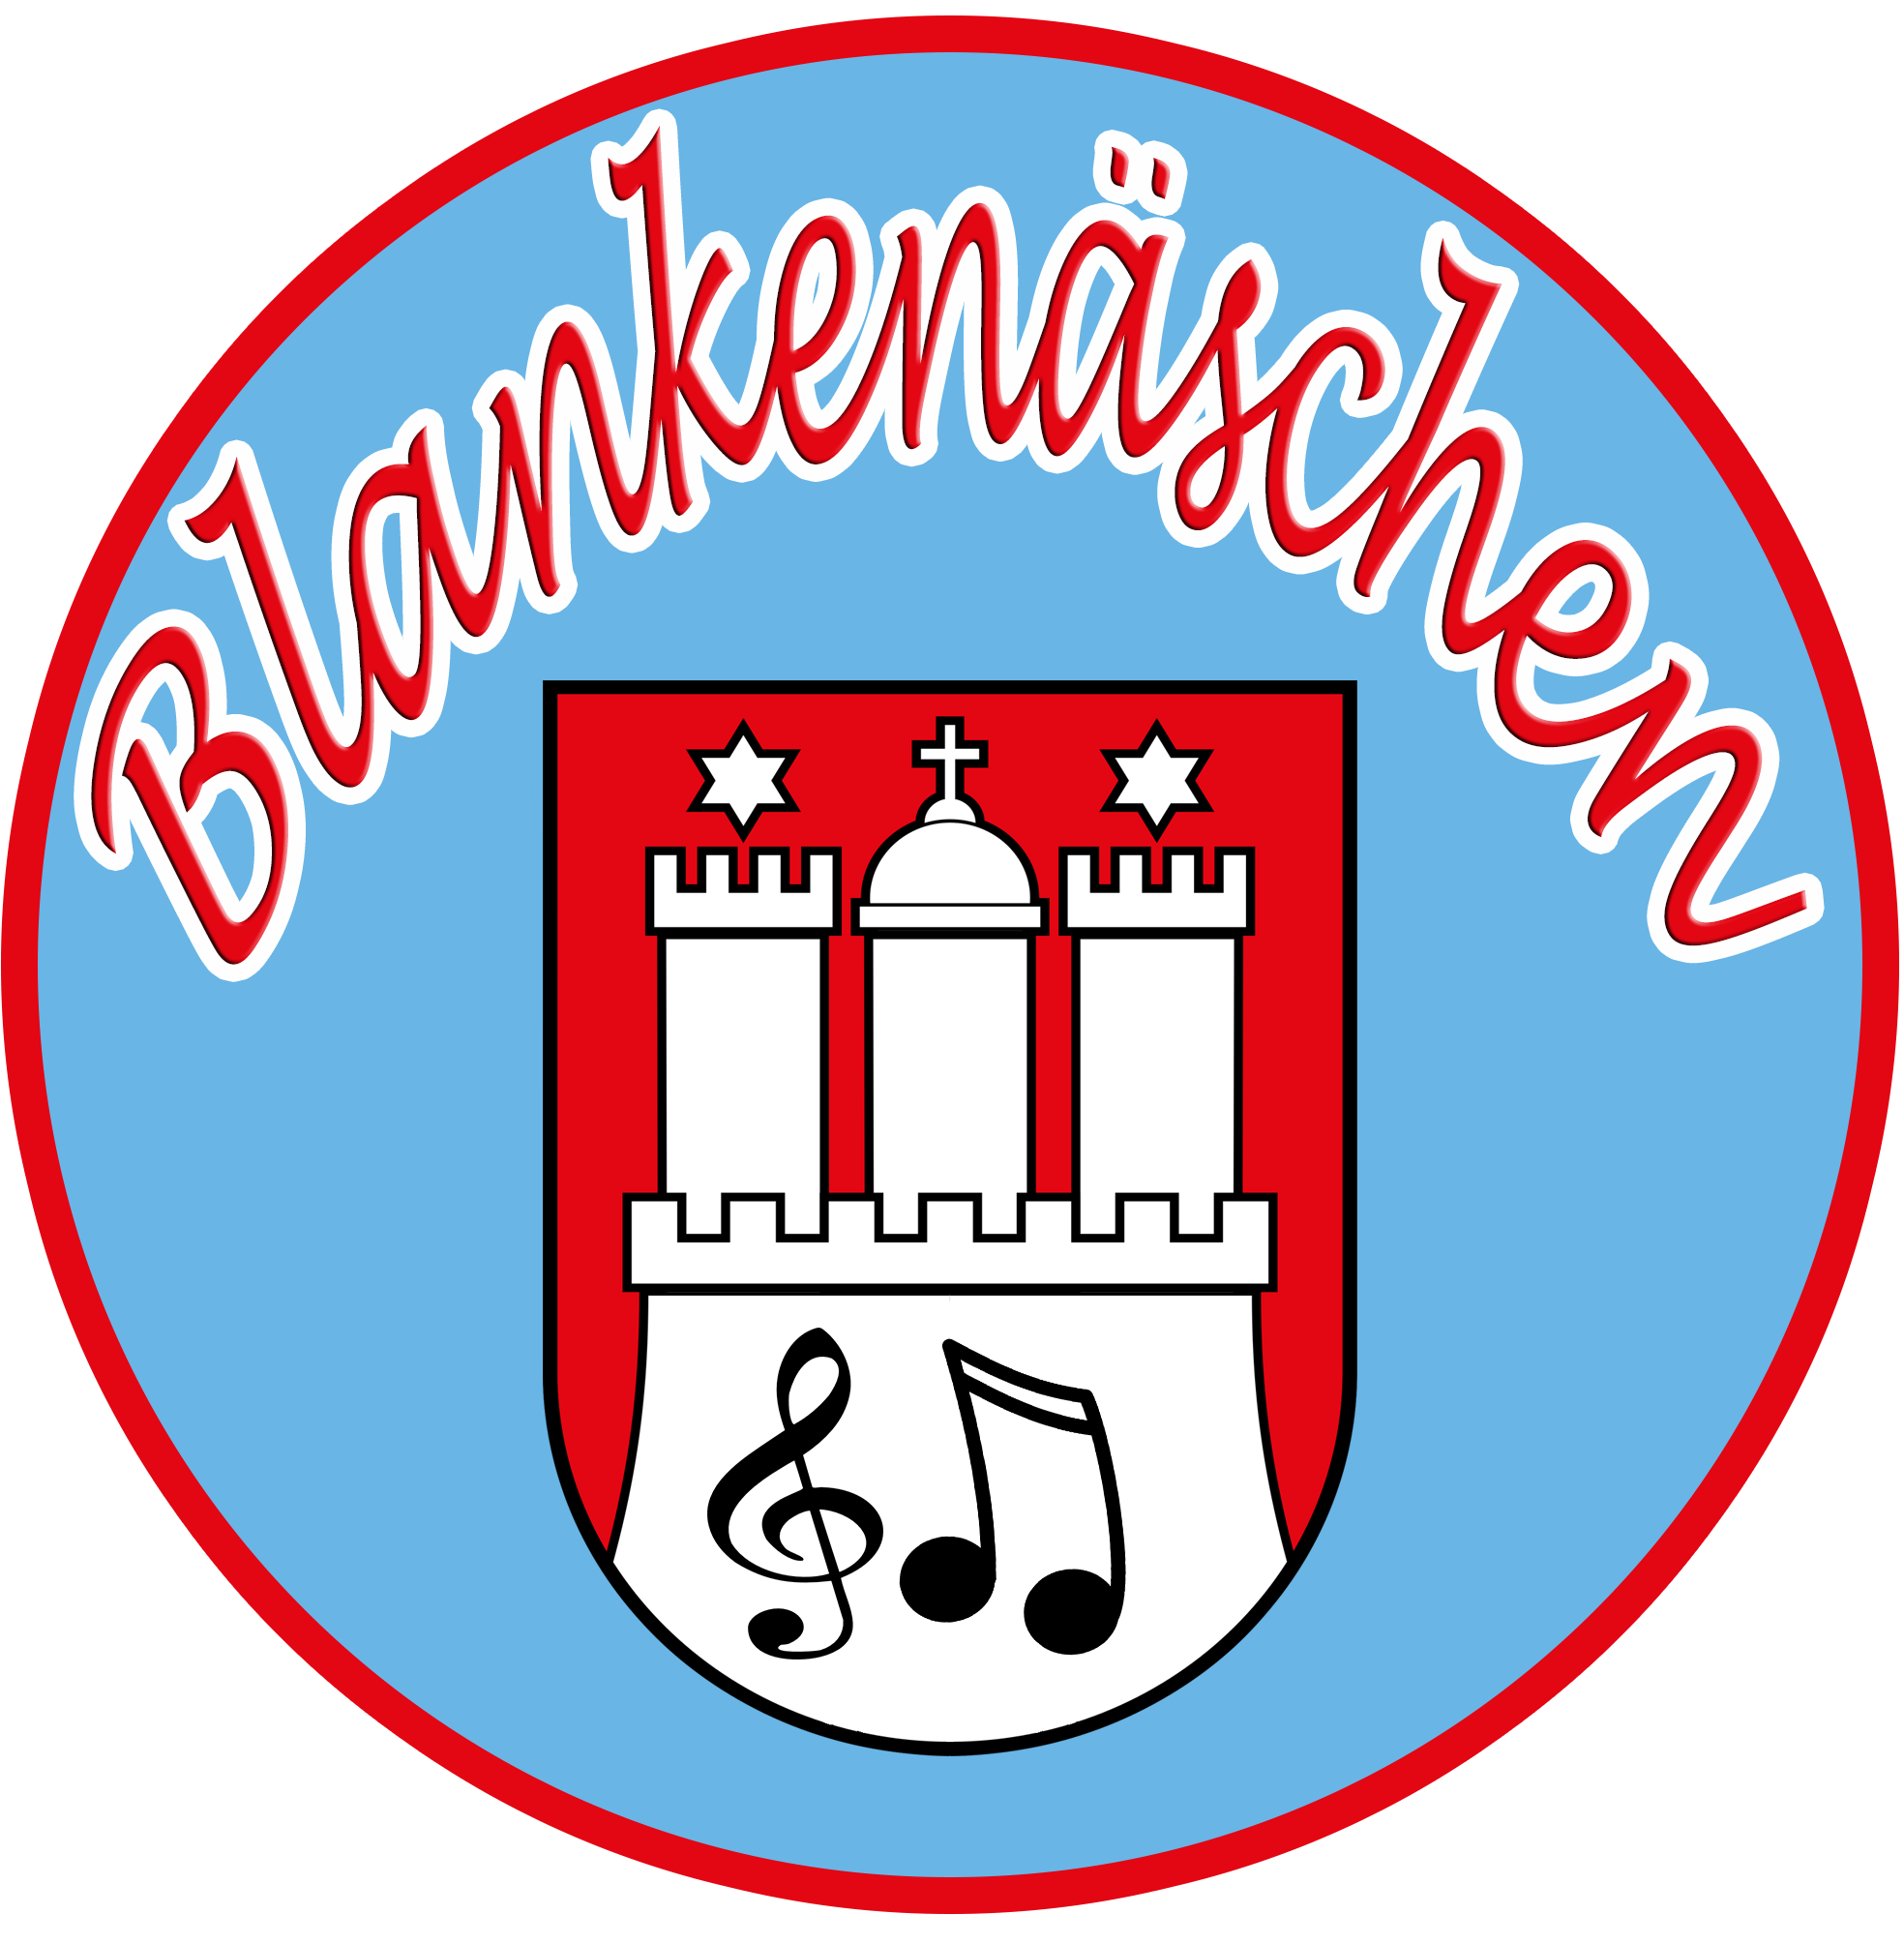 (c) Blankenaeschen.de